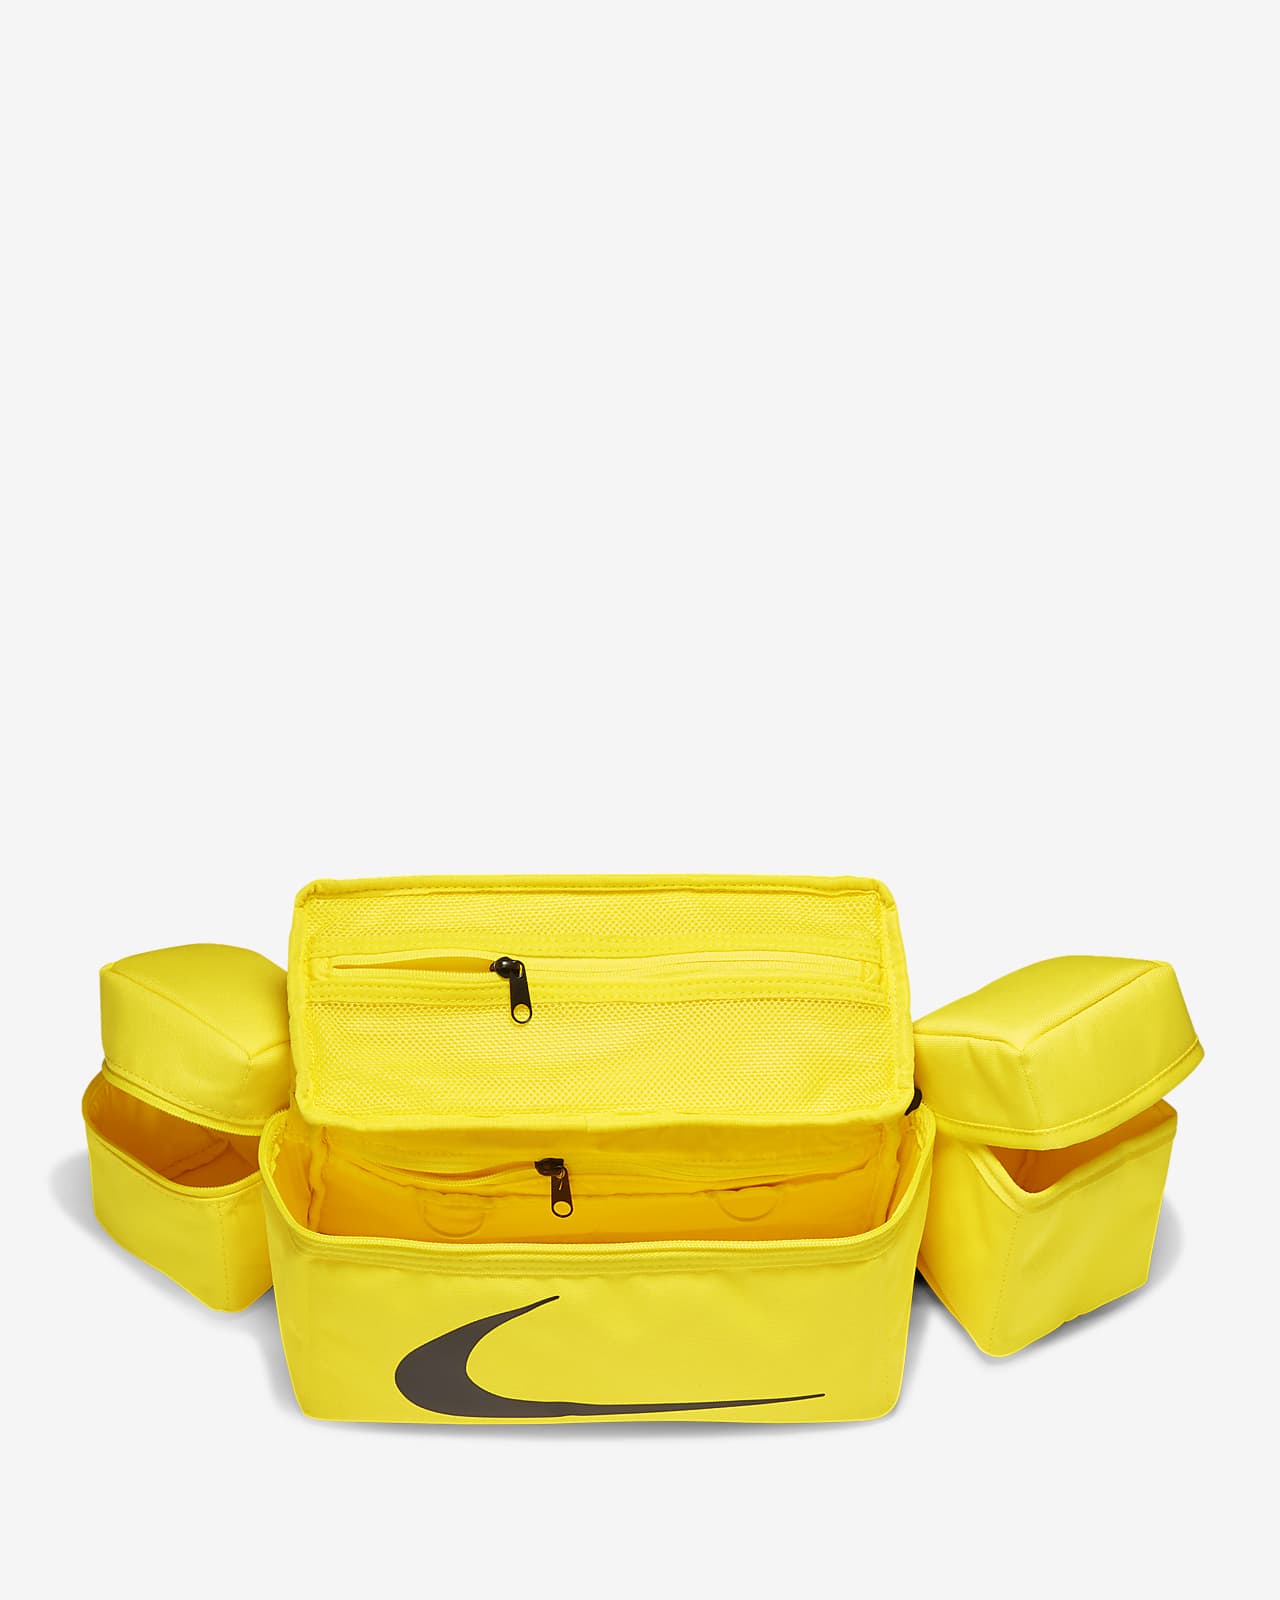 Brand New! Nike offwhite duffle bag, 男裝, 袋, 腰袋、手提袋、小袋